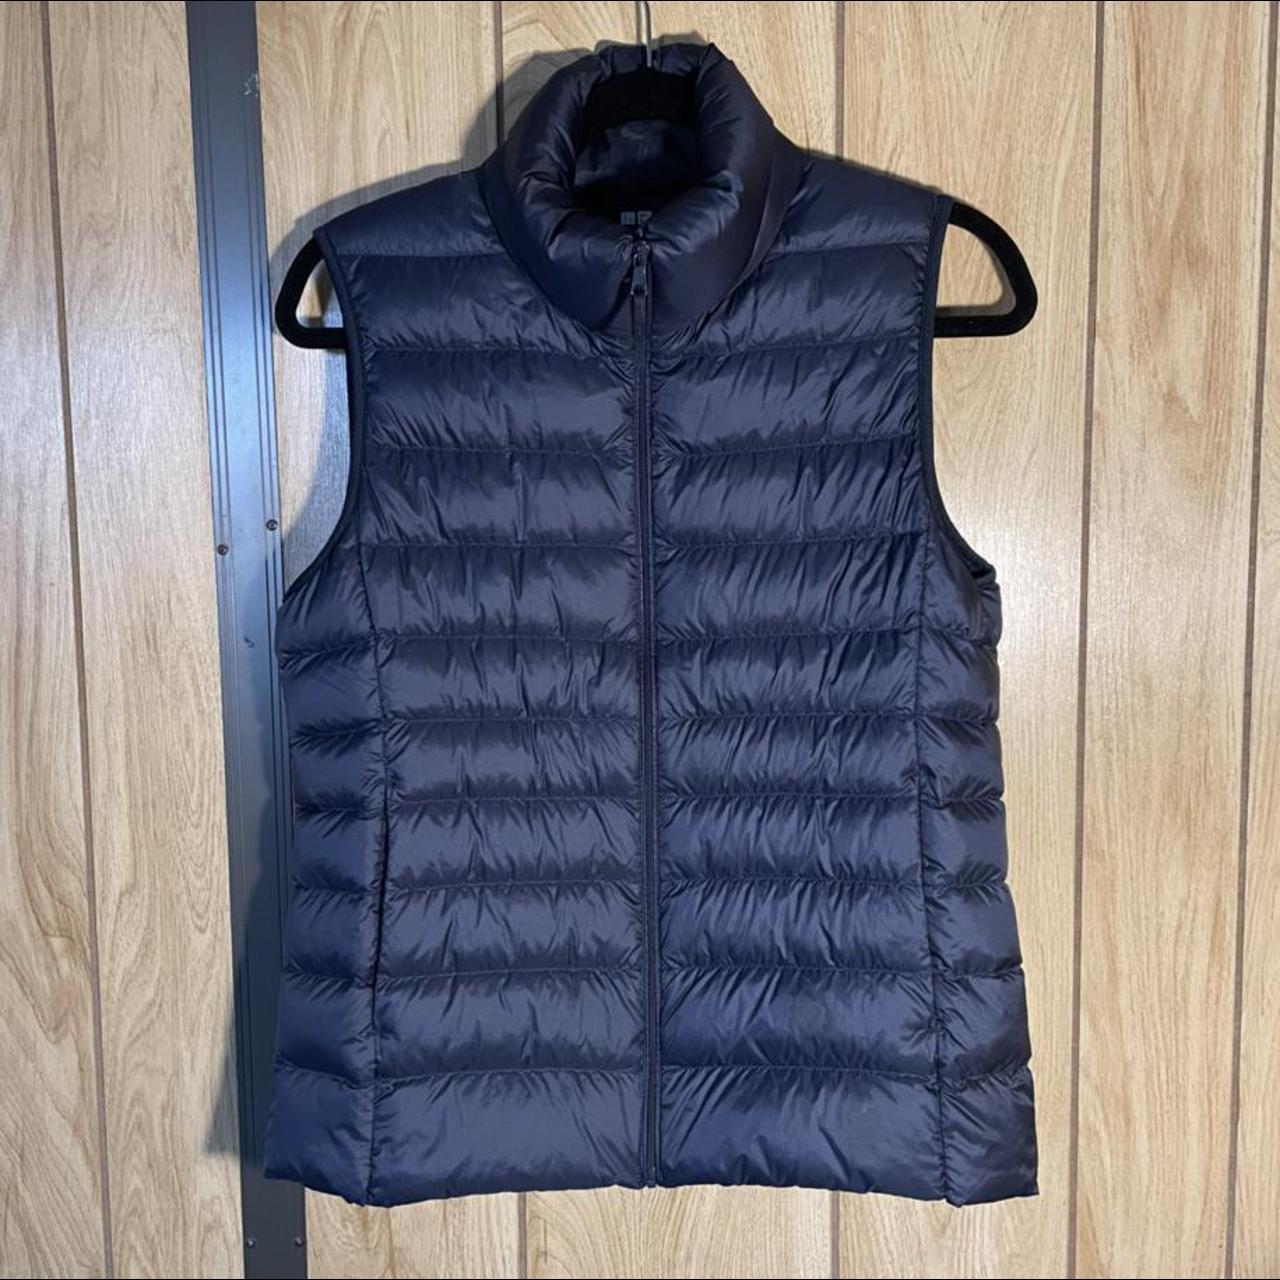 Uniqlo navy blue puffer vest size medium great... - Depop